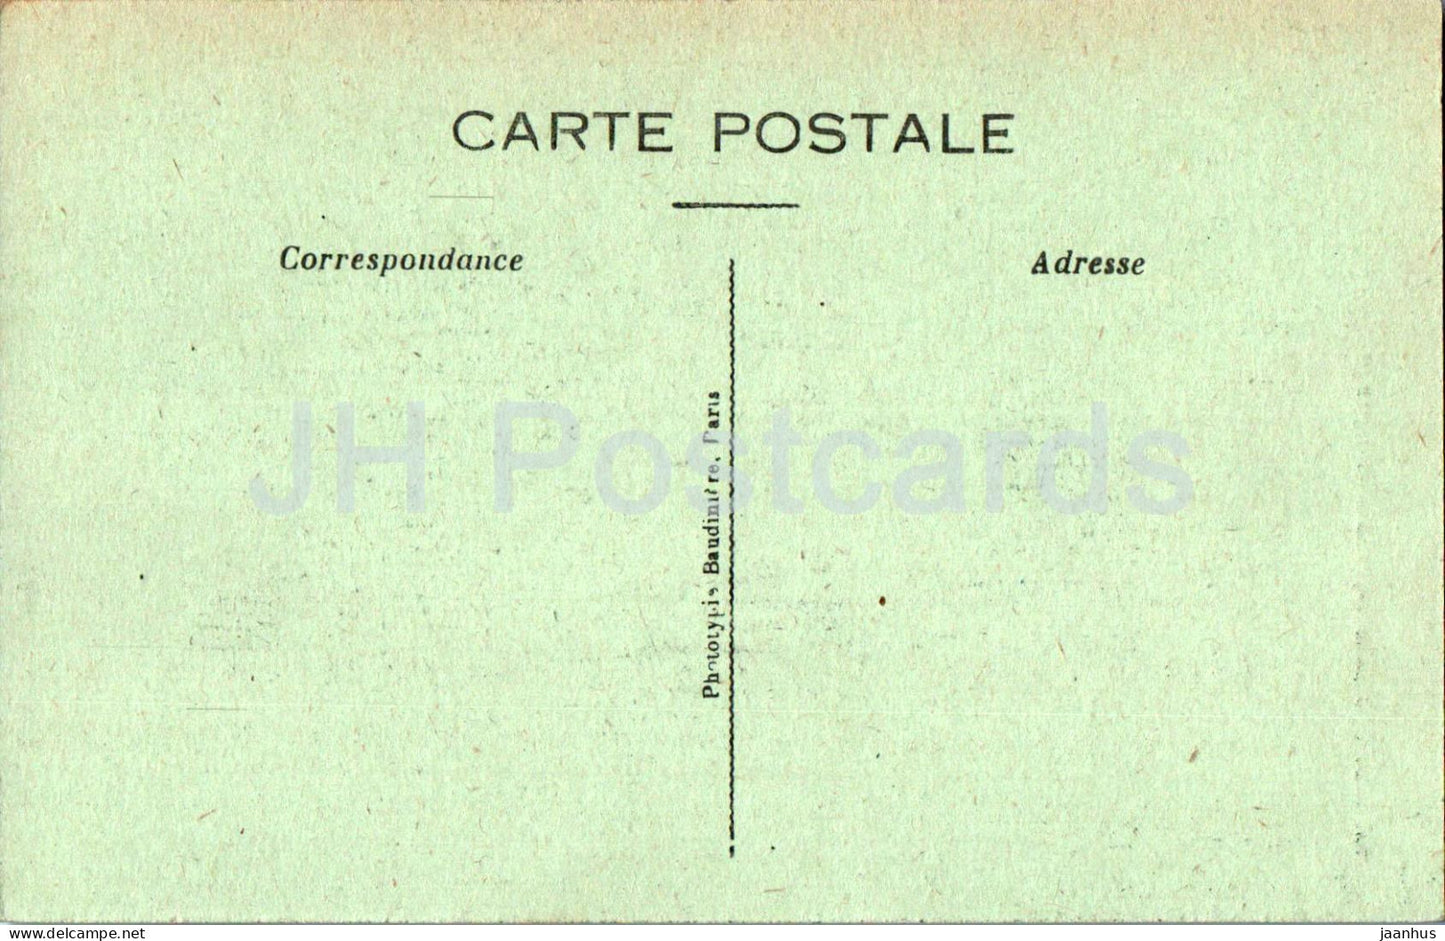 L'Epine - La Basilique - Kathedrale - 15 - alte Postkarte - Frankreich - unbenutzt 